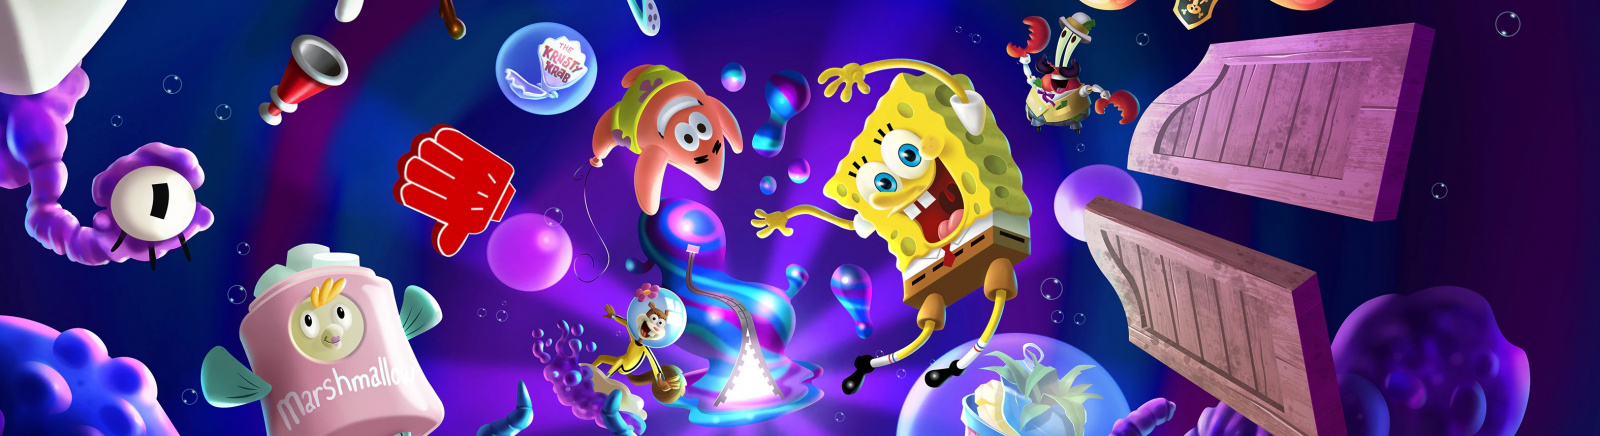 Дата выхода SpongeBob SquarePants: The Cosmic Shake (Губка Боб Квадратные Штаны: The Cosmic Shake)  на PC, PS4 и Xbox One в России и во всем мире